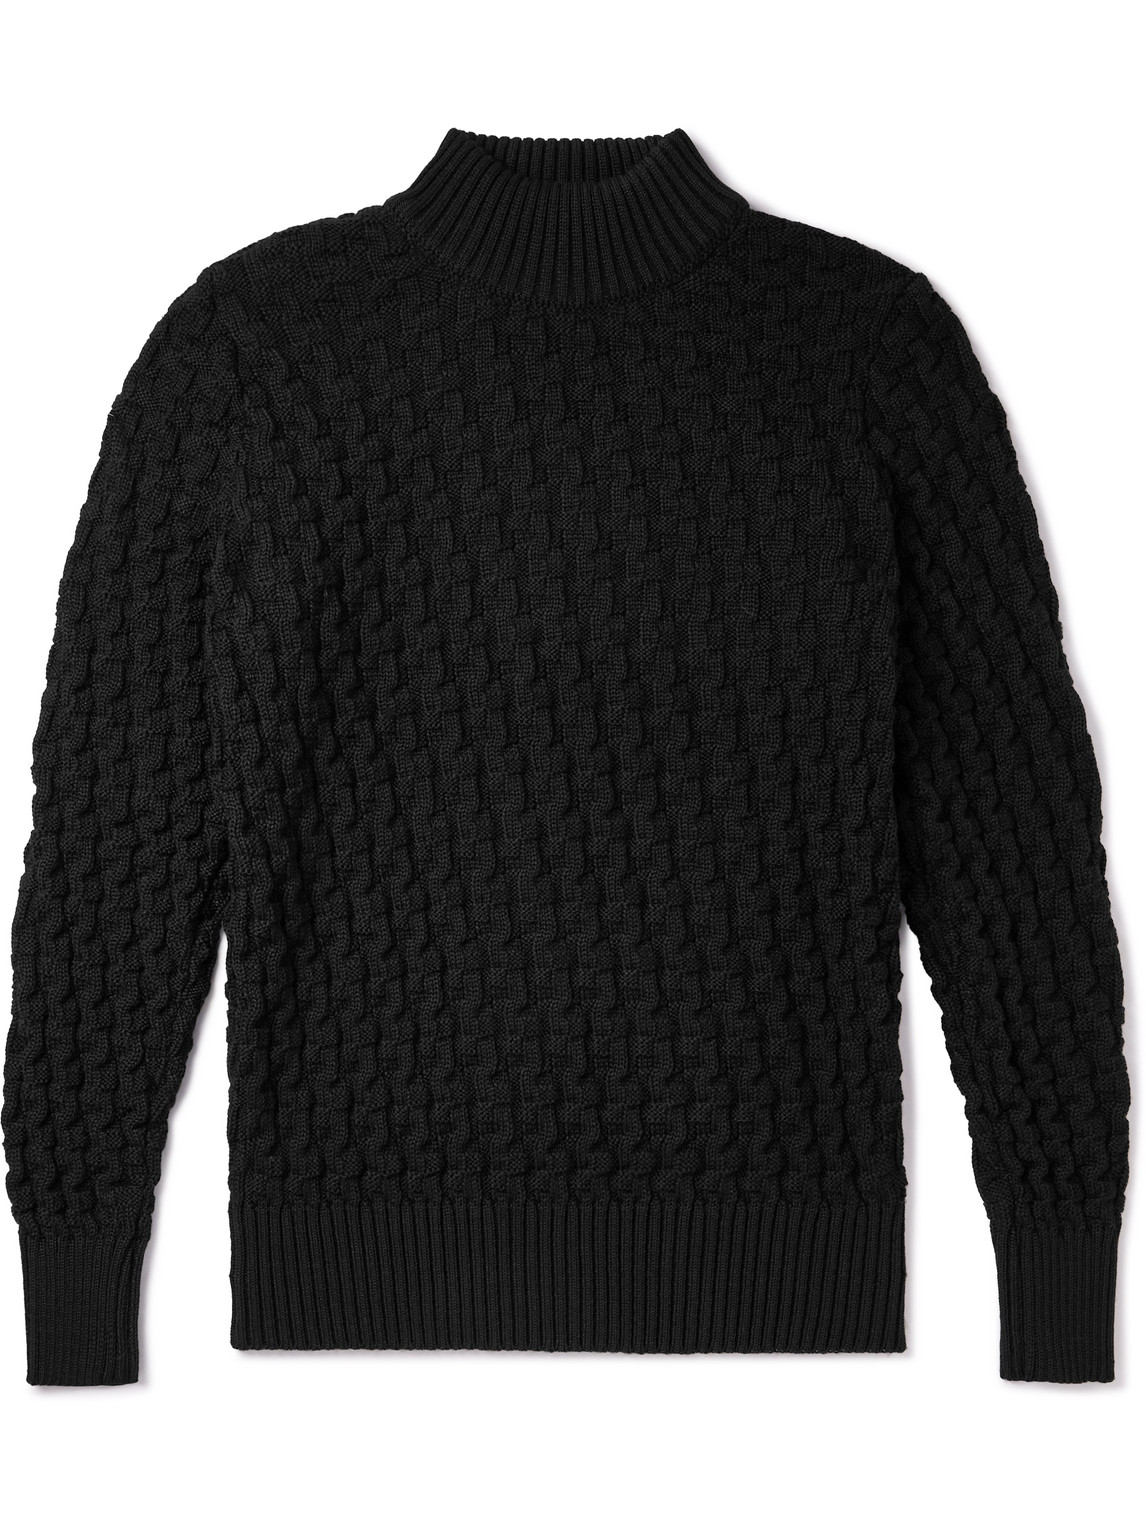 Stark Slim-Fit Cable-Knit Merino Wool Sweater